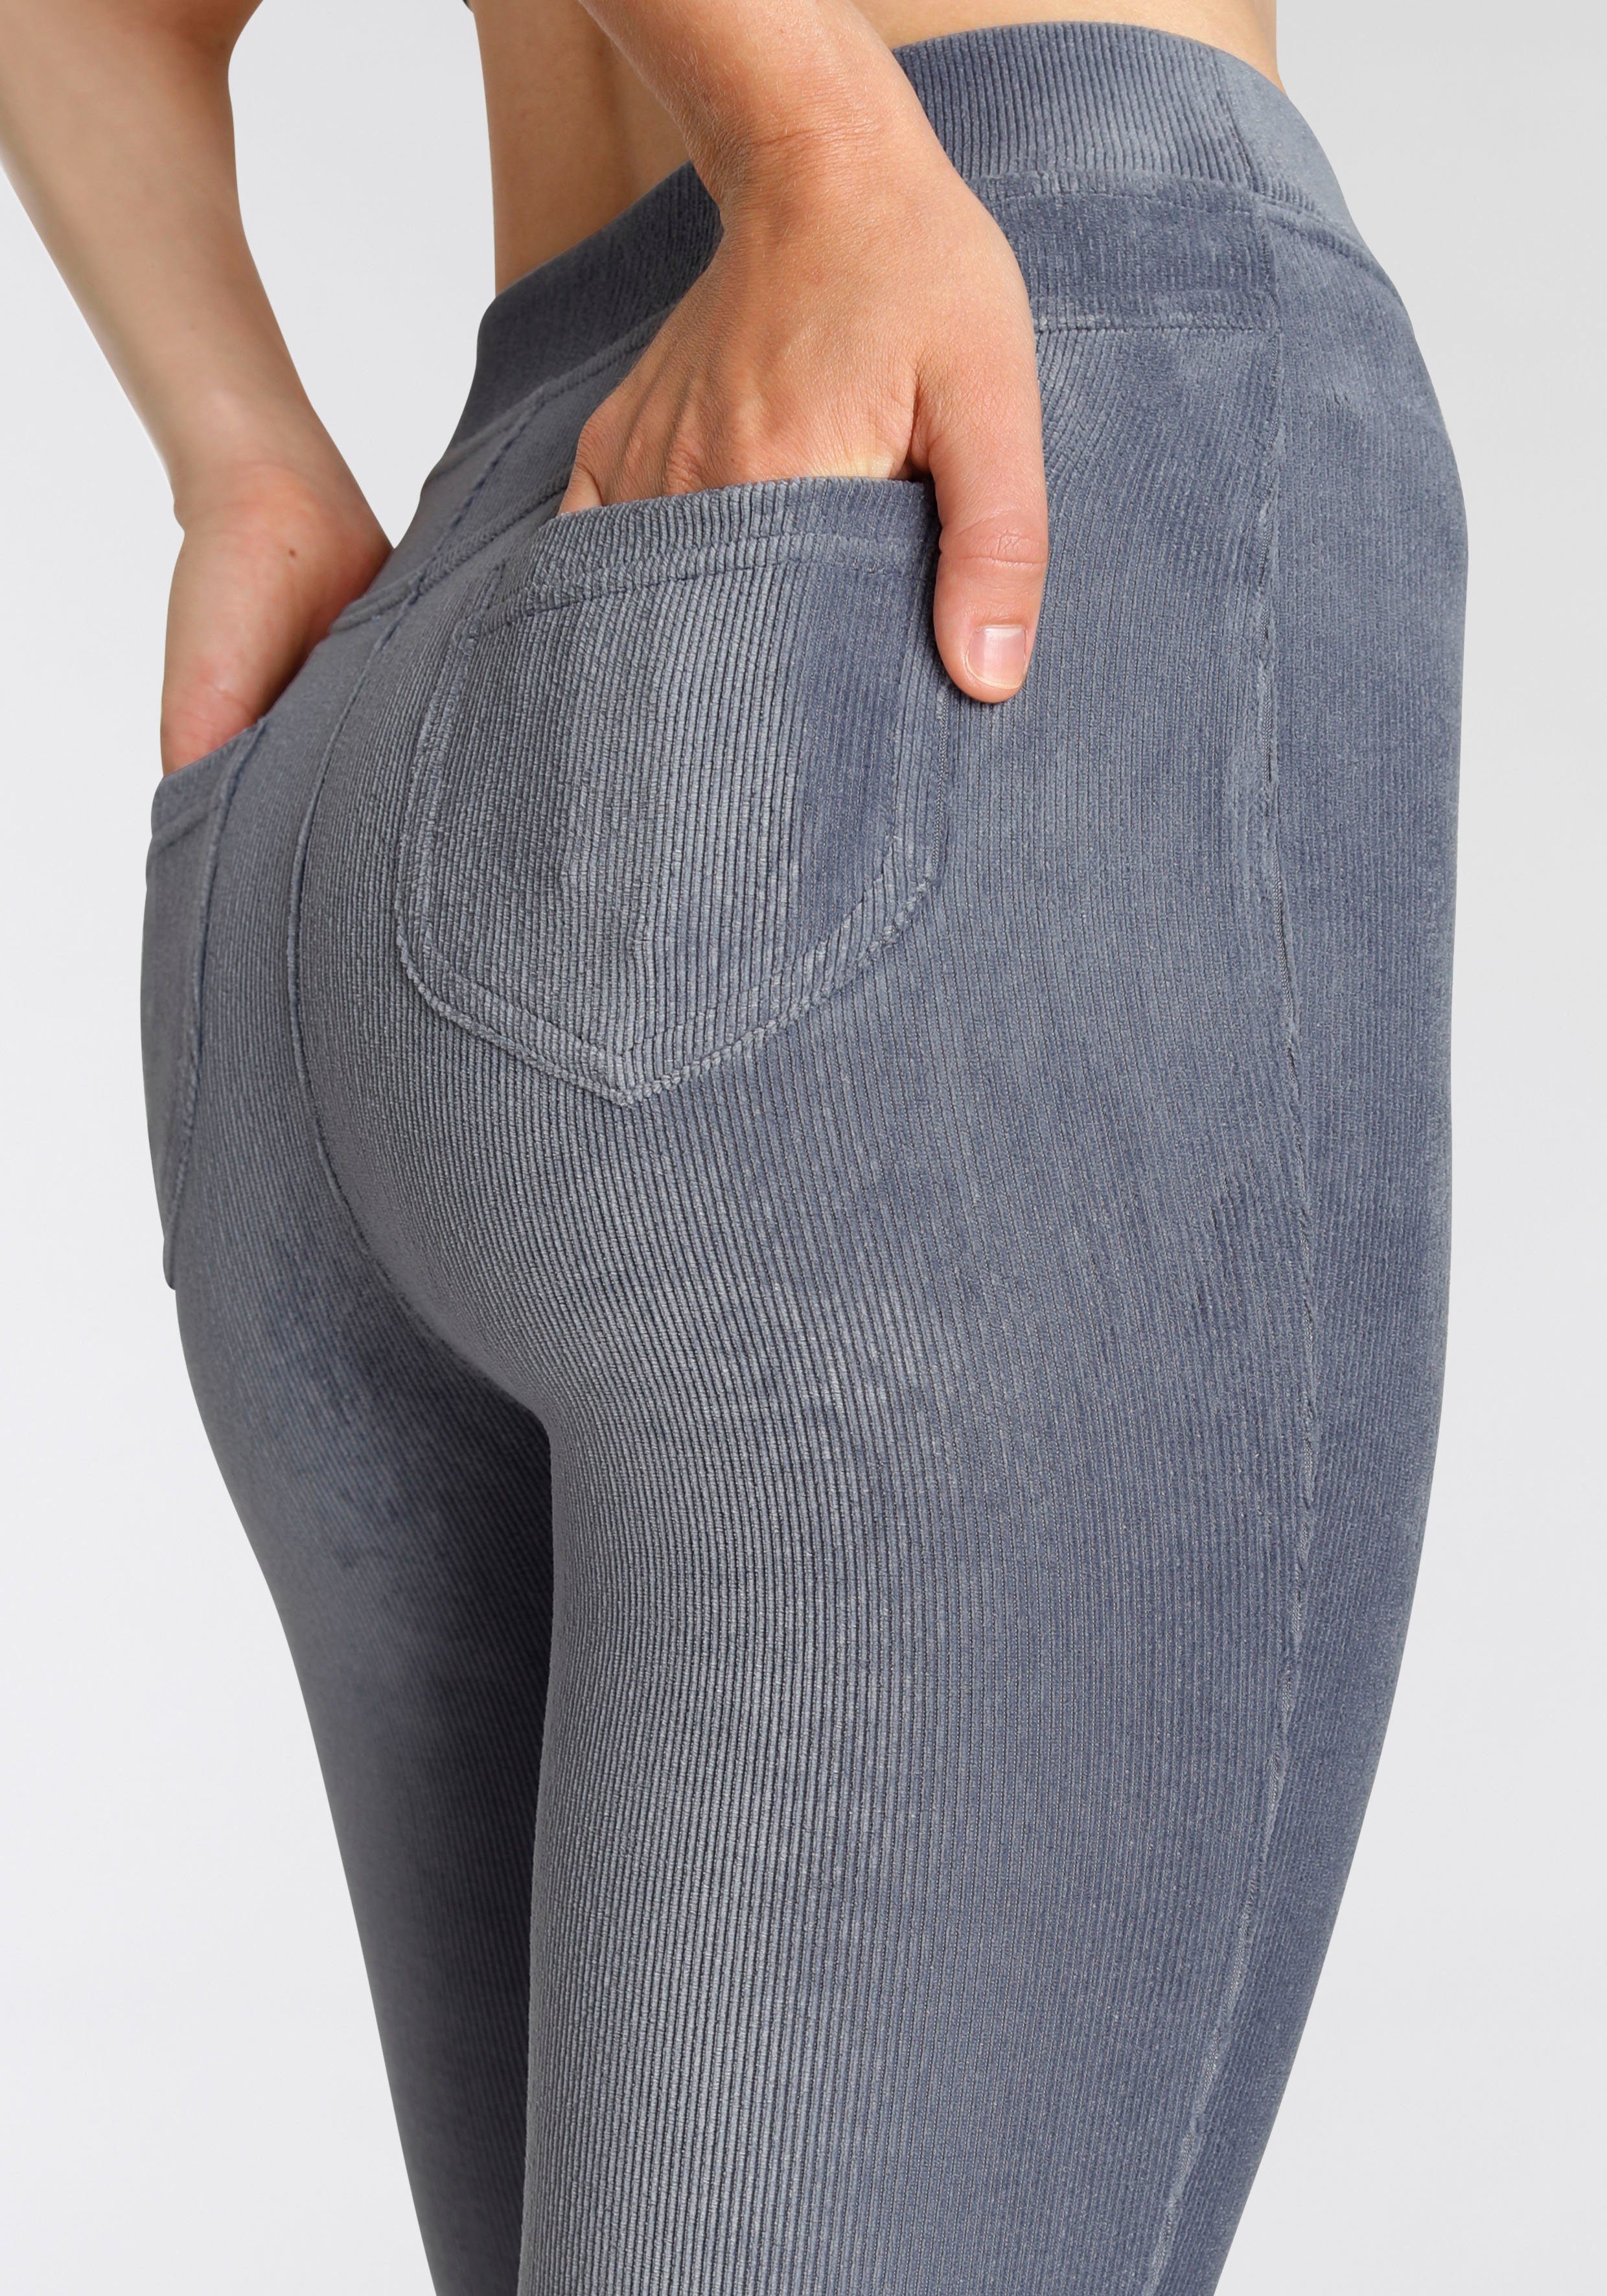 in LASCANA Loungewear Material Leggings aus Cord-Optik, weichem graublau